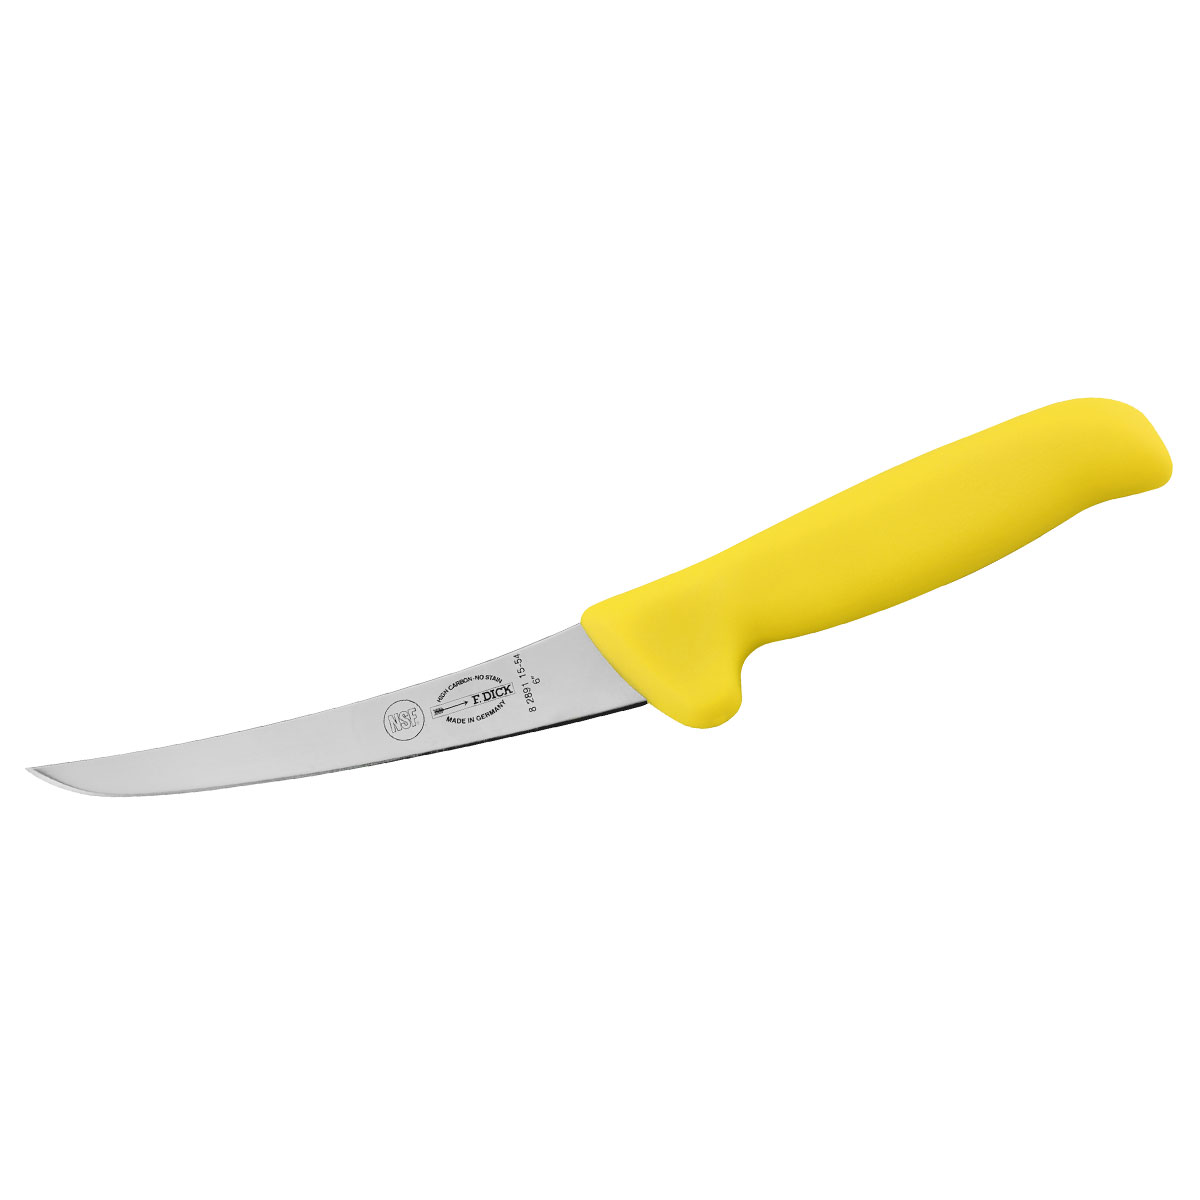 F.Dick Boning Knife, 15cm (6) - MasterGrip - Yellow